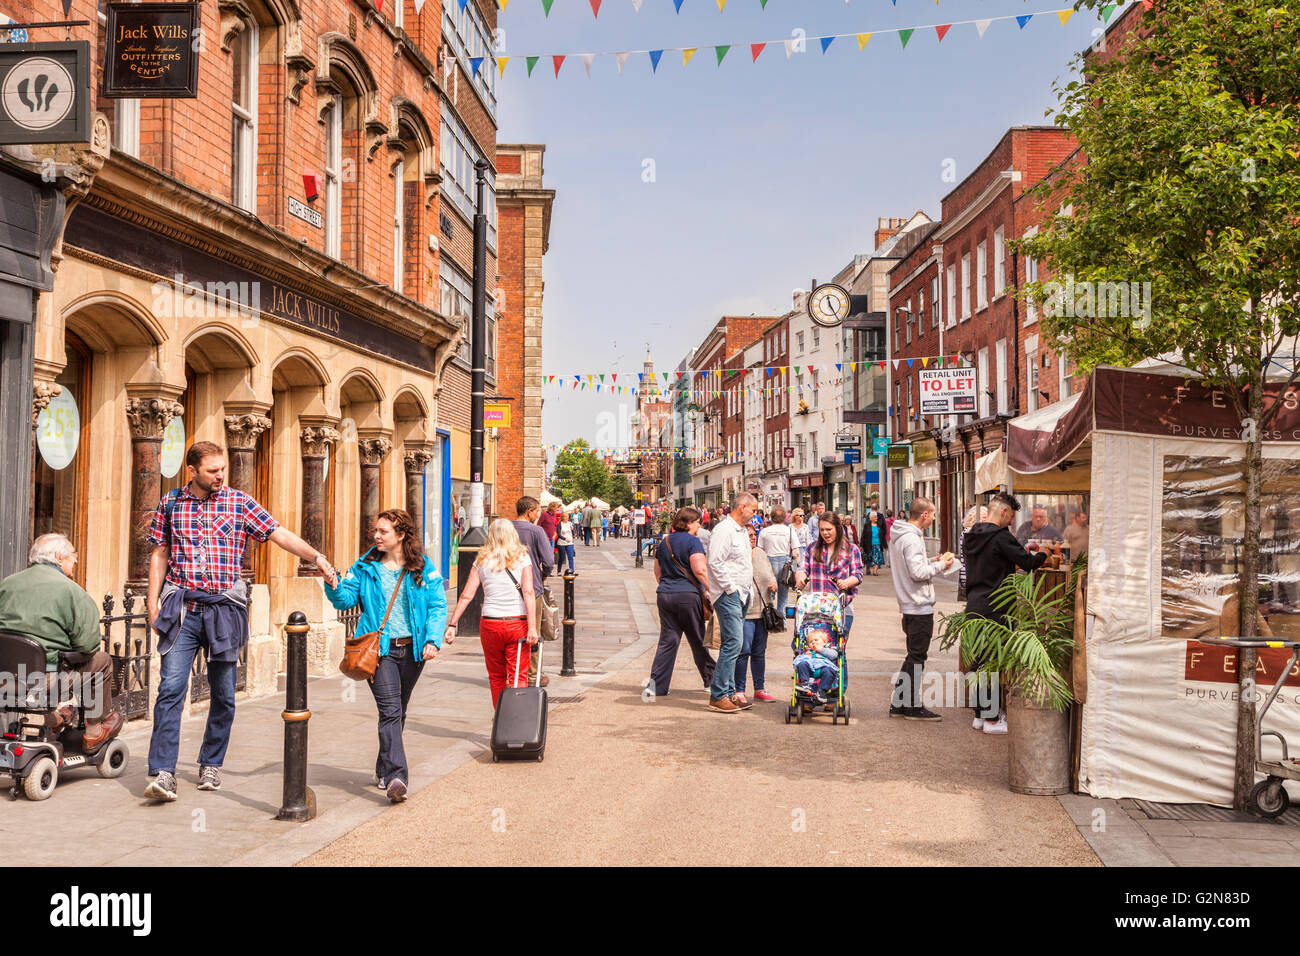 Les gens shopping à Worcester High Street, London, England, UK Banque D'Images